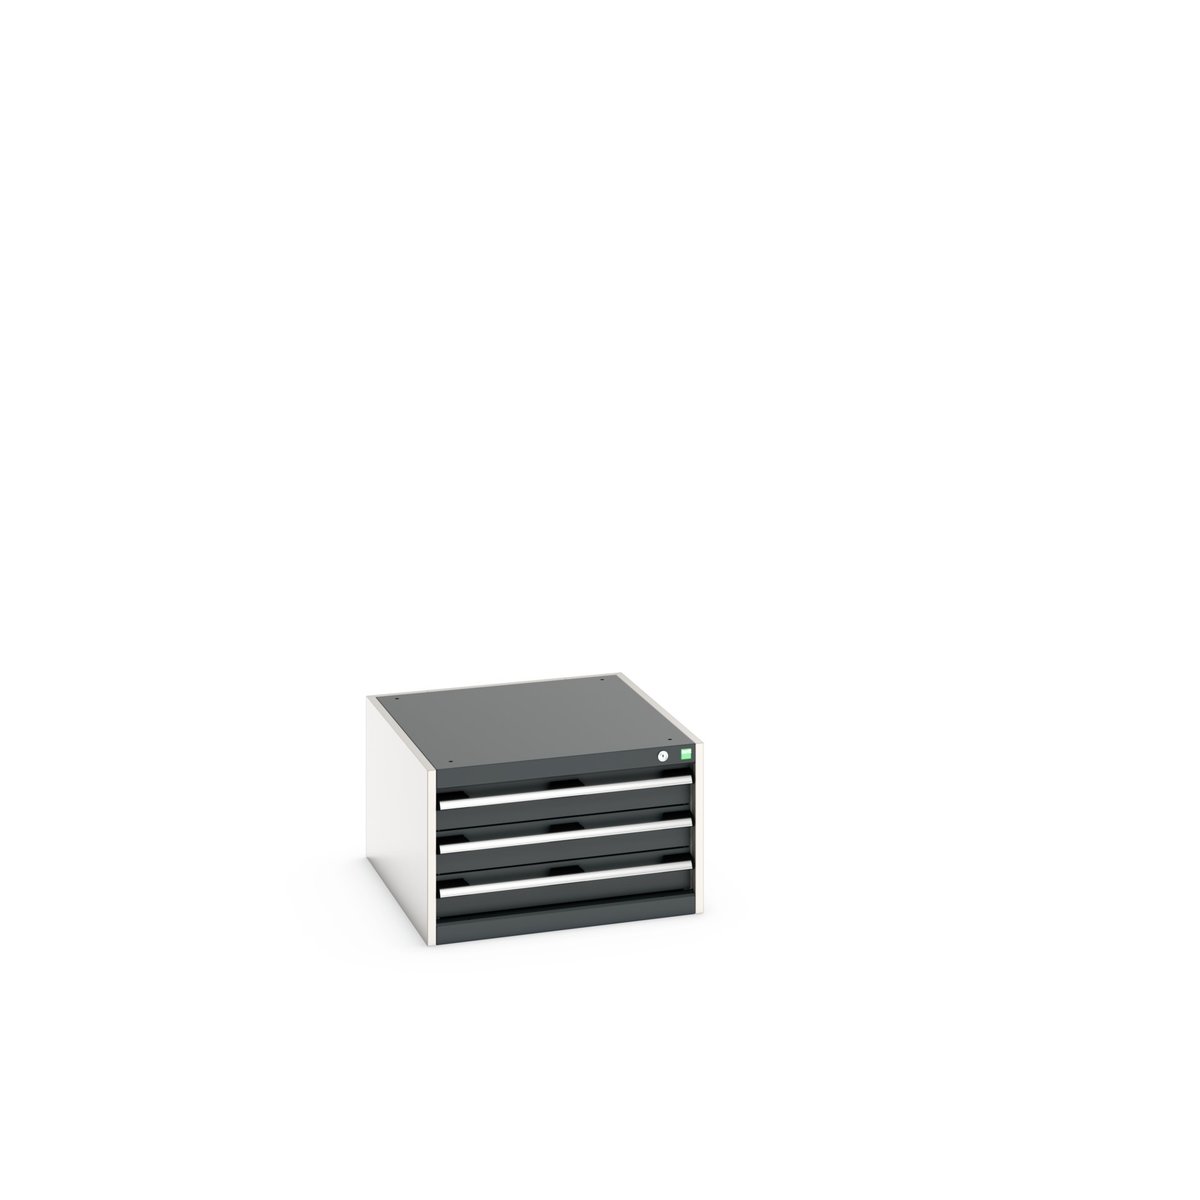 40027096. - cubio drawer cabinet 